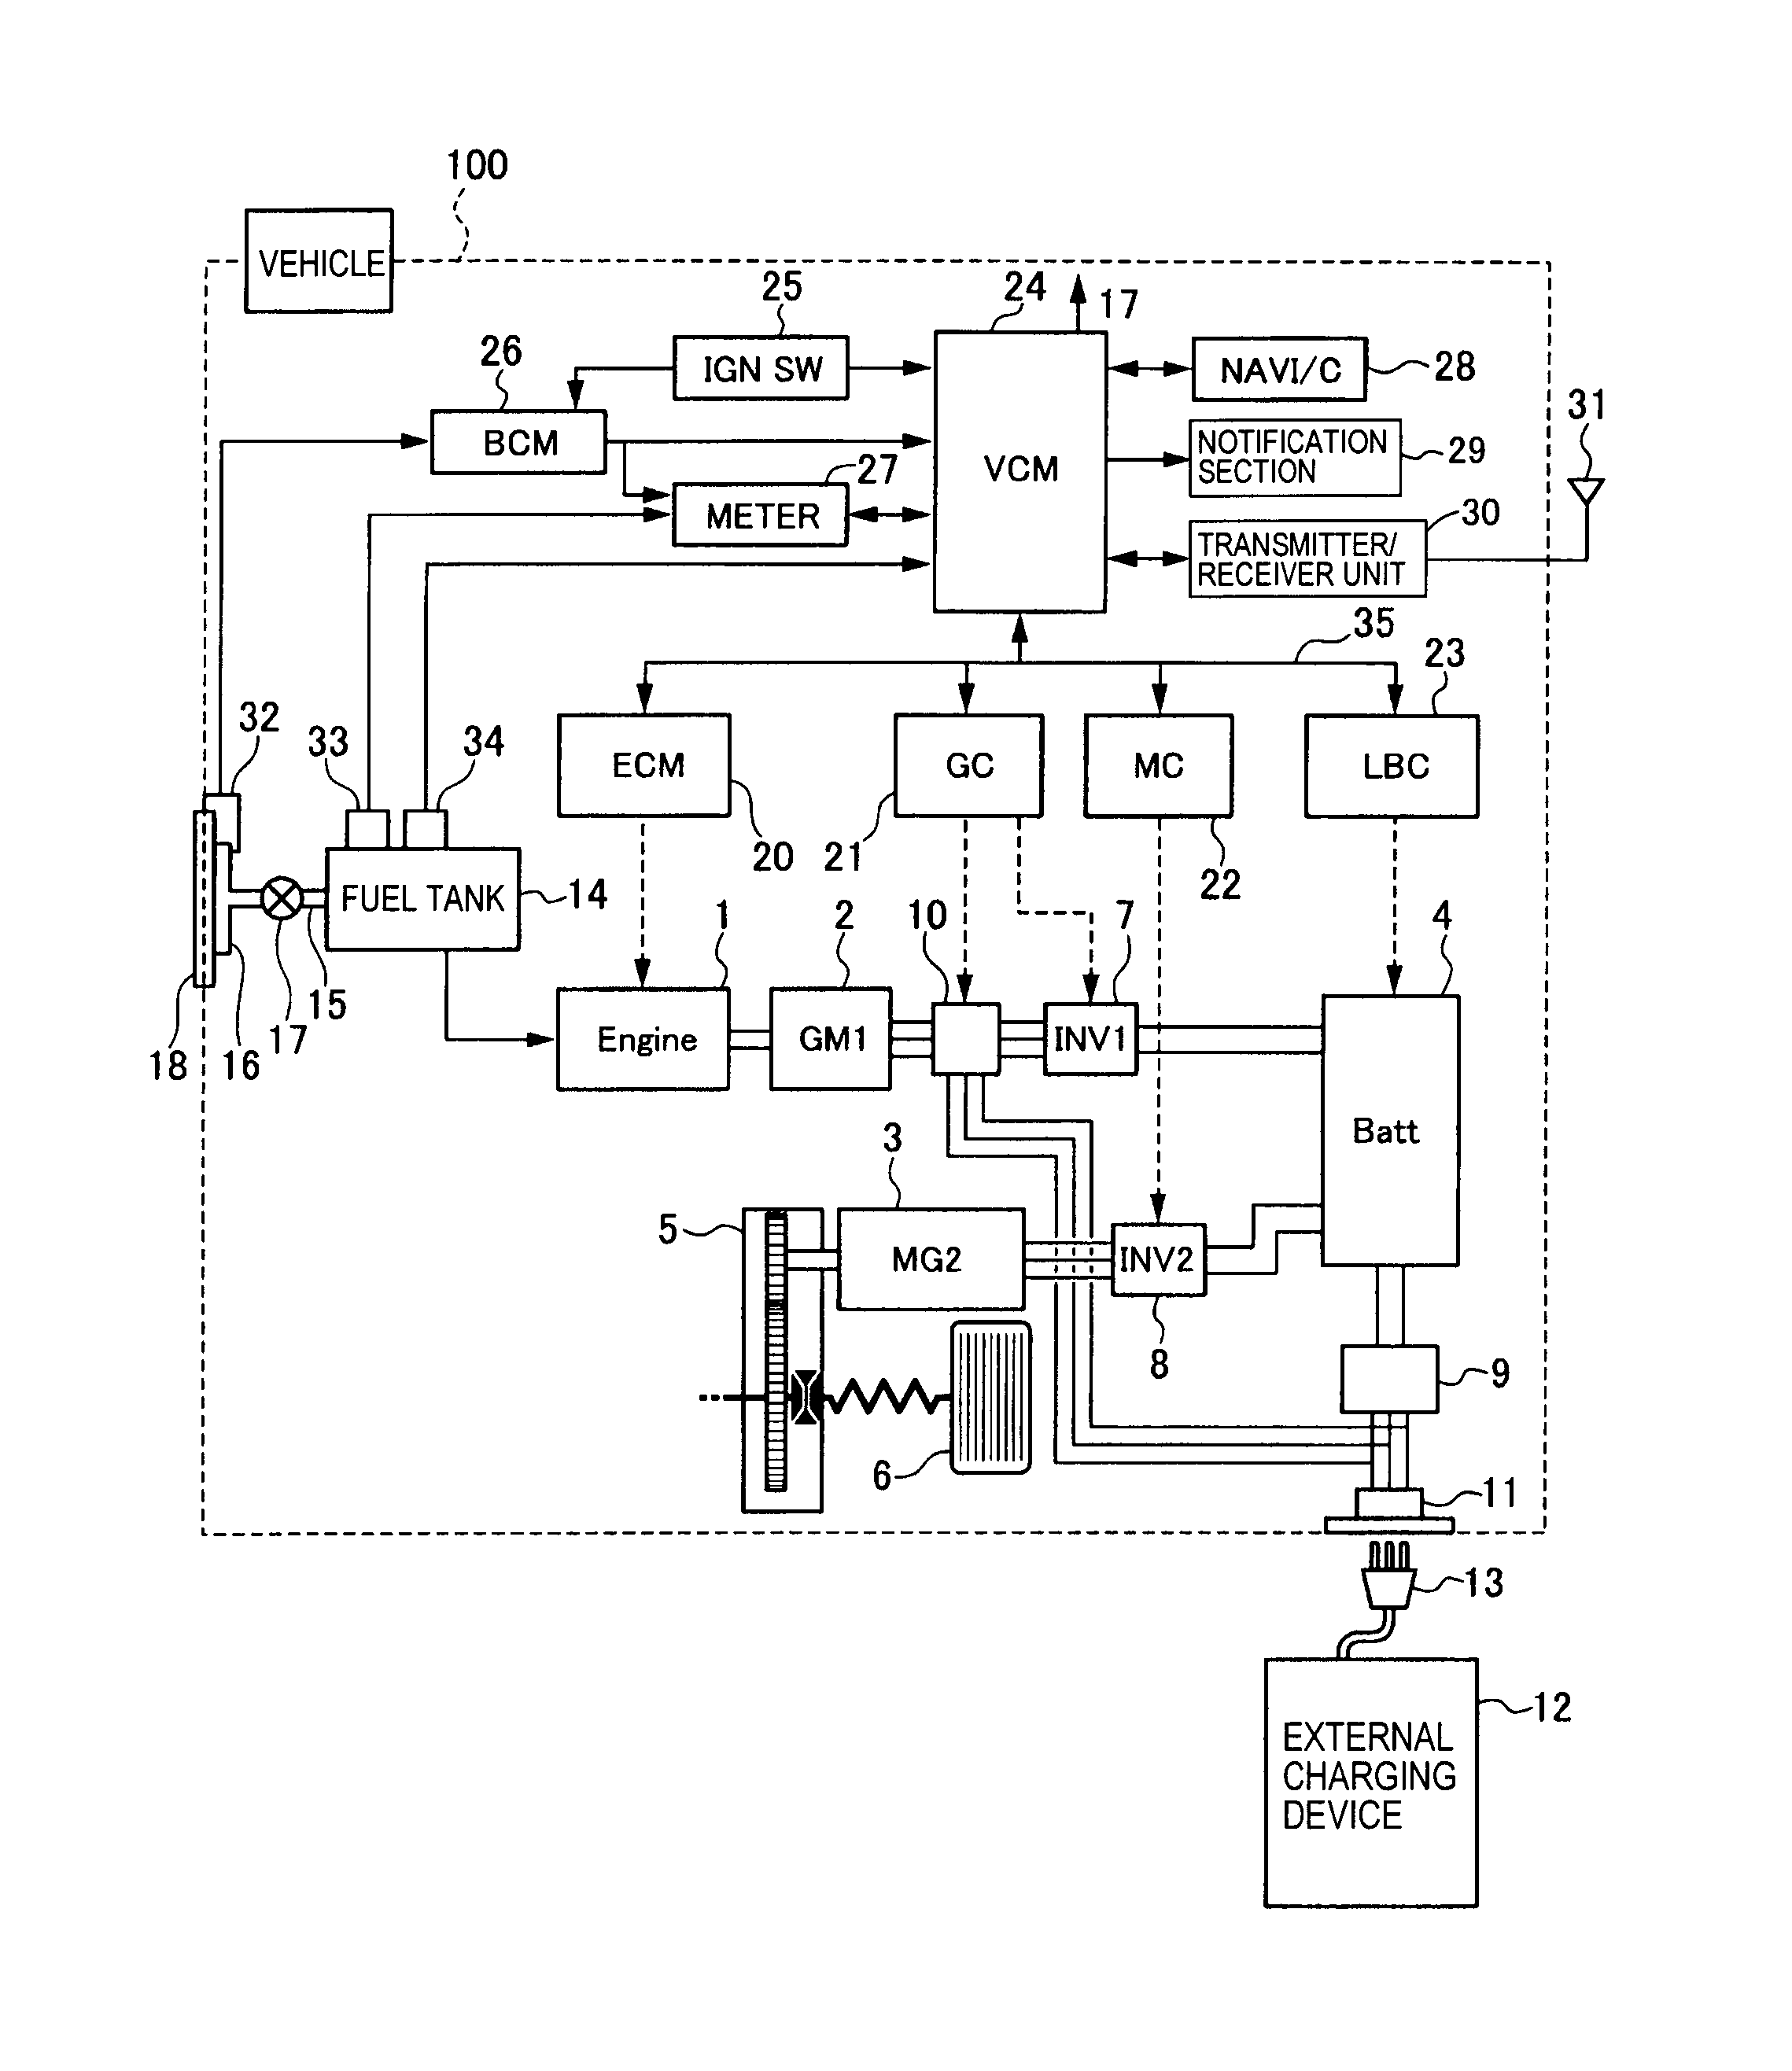 1936 chevrolet standard wiring diagram